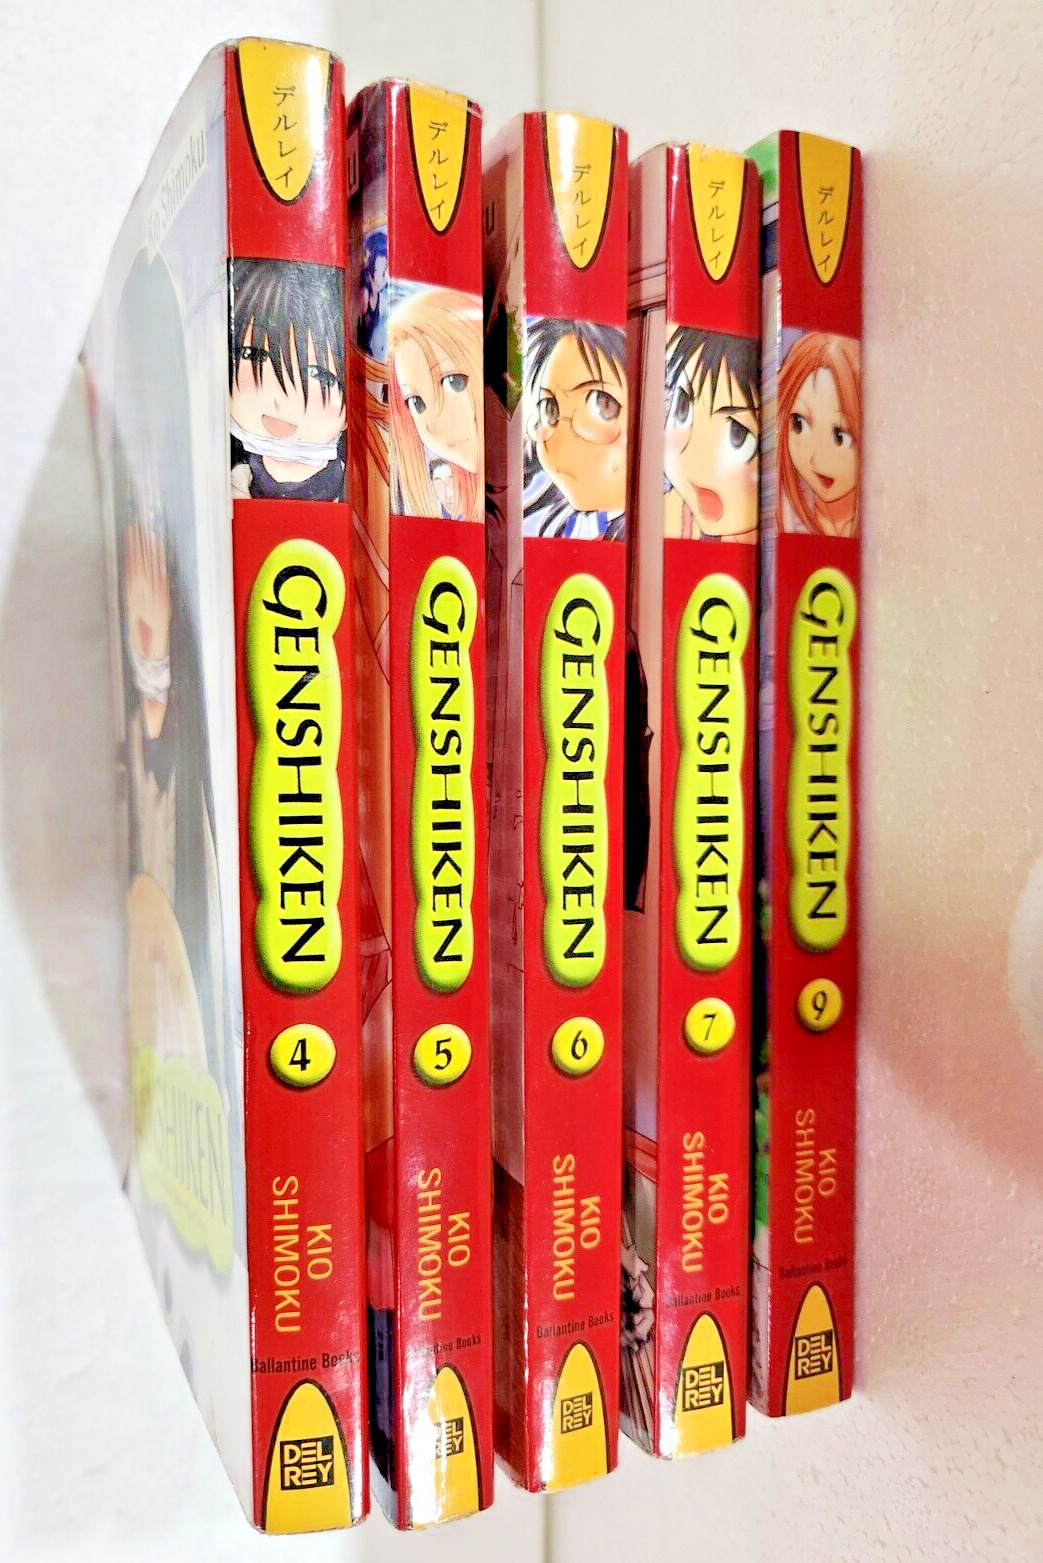 Lot of 5 Del Rey GENSHIKEN Kio Shimoku Manga Graphic Novels Vols 4 5 6 7 9